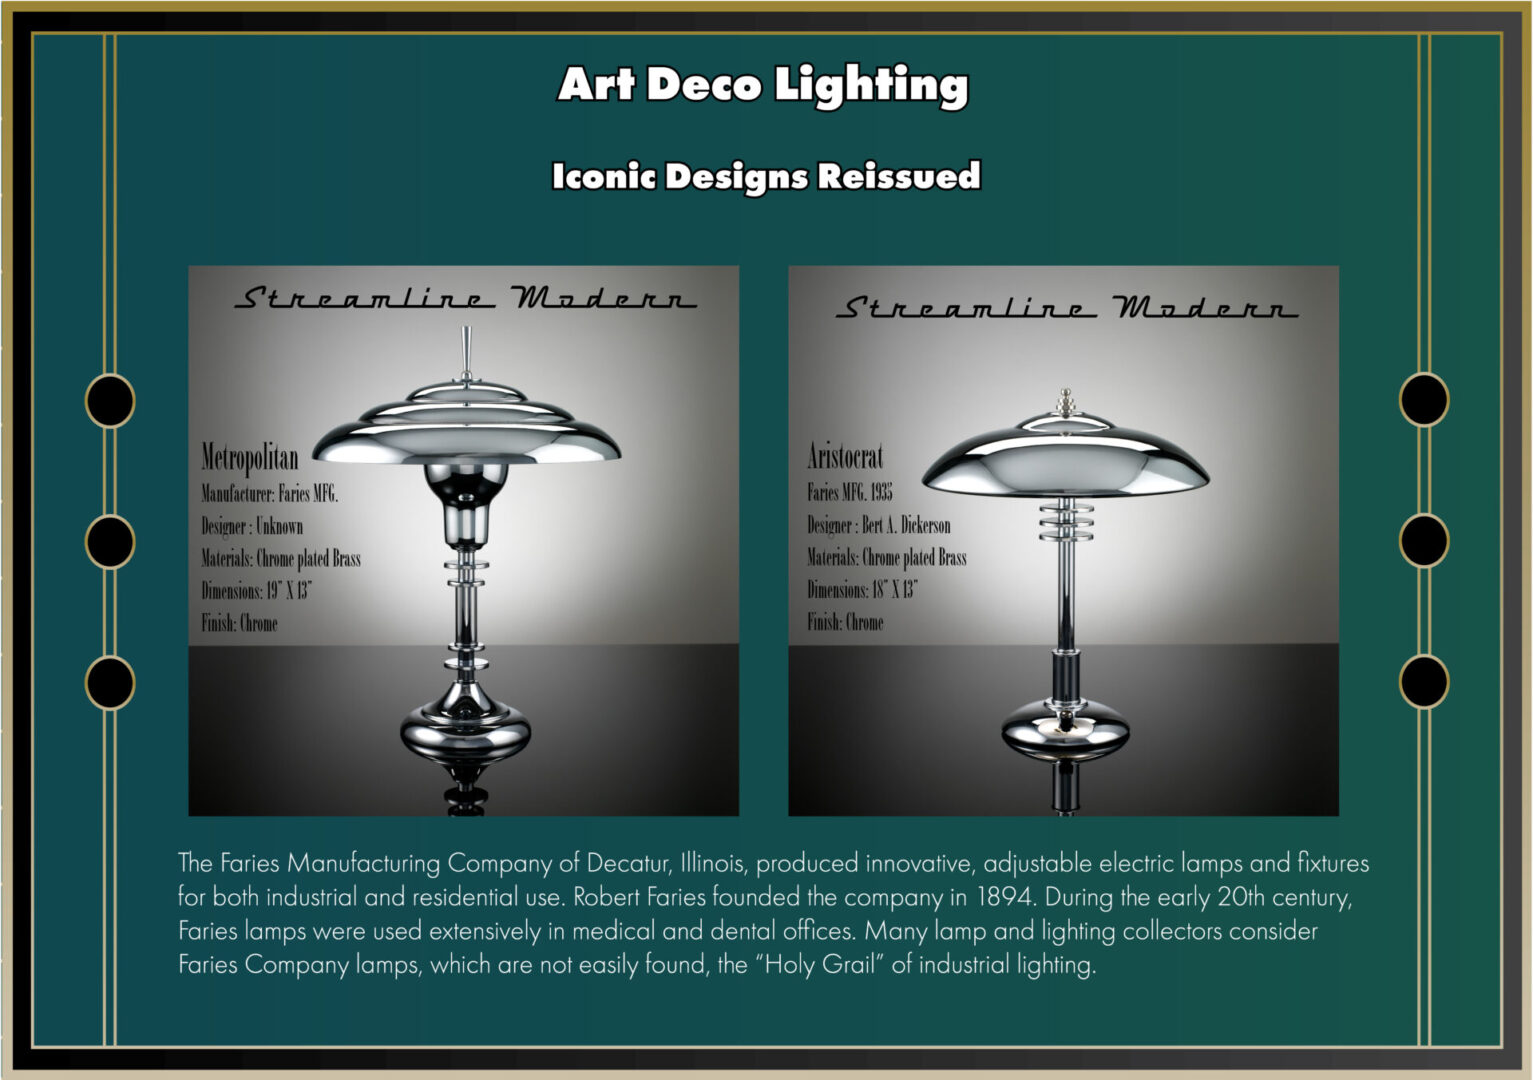 Iconic Art Deco Lighting Designs Reissued